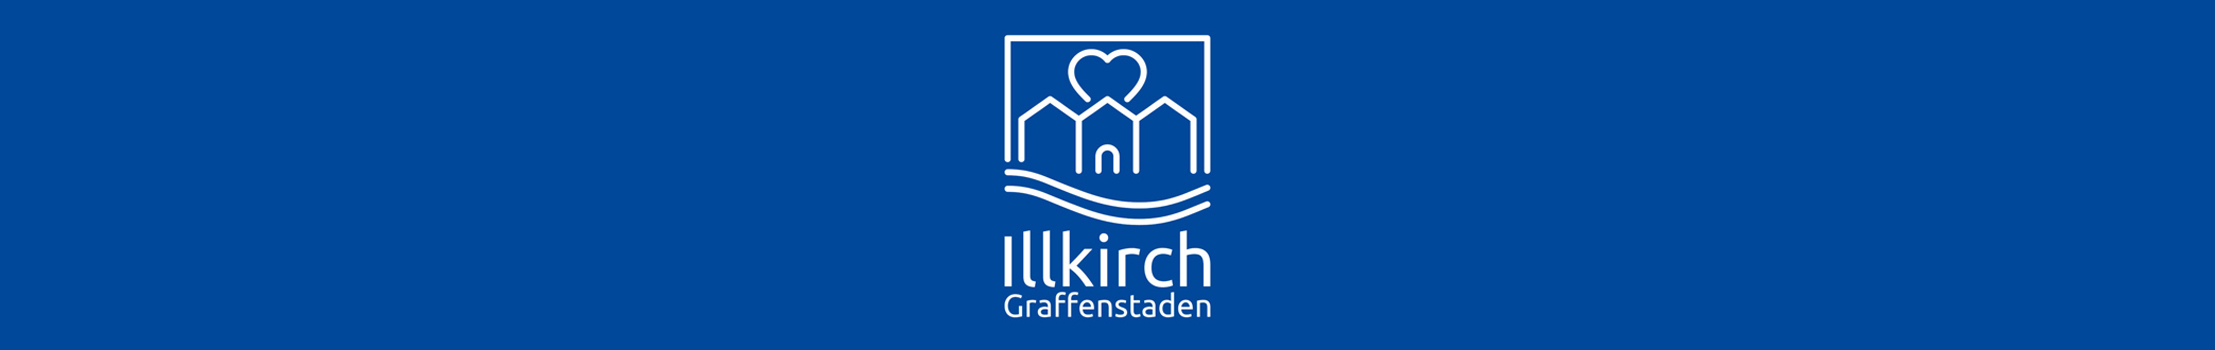 Un nouveau logo pour Illkirch-Graffenstaden